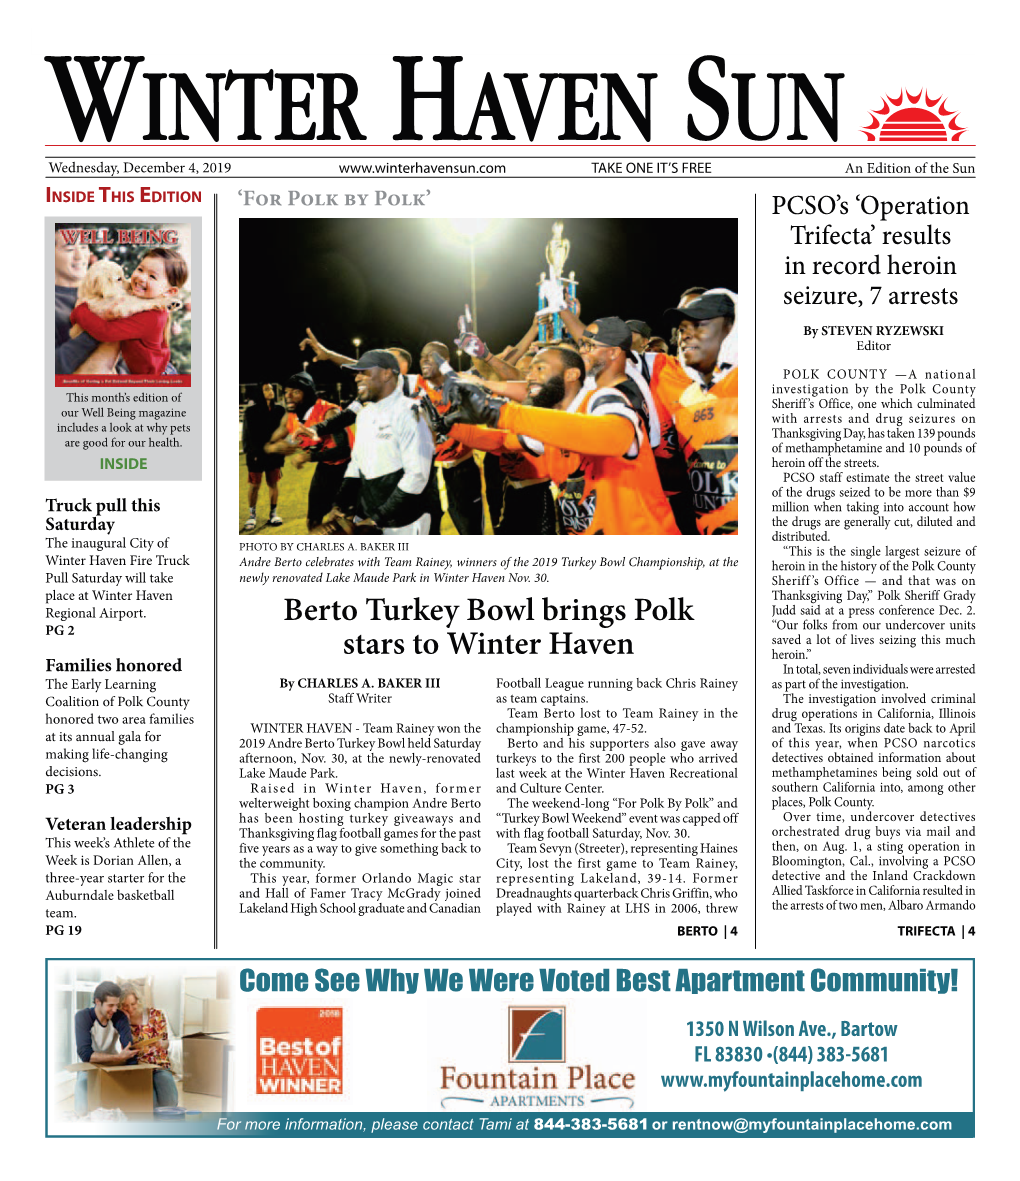 Berto Turkey Bowl Brings Polk Stars to Winter Haven